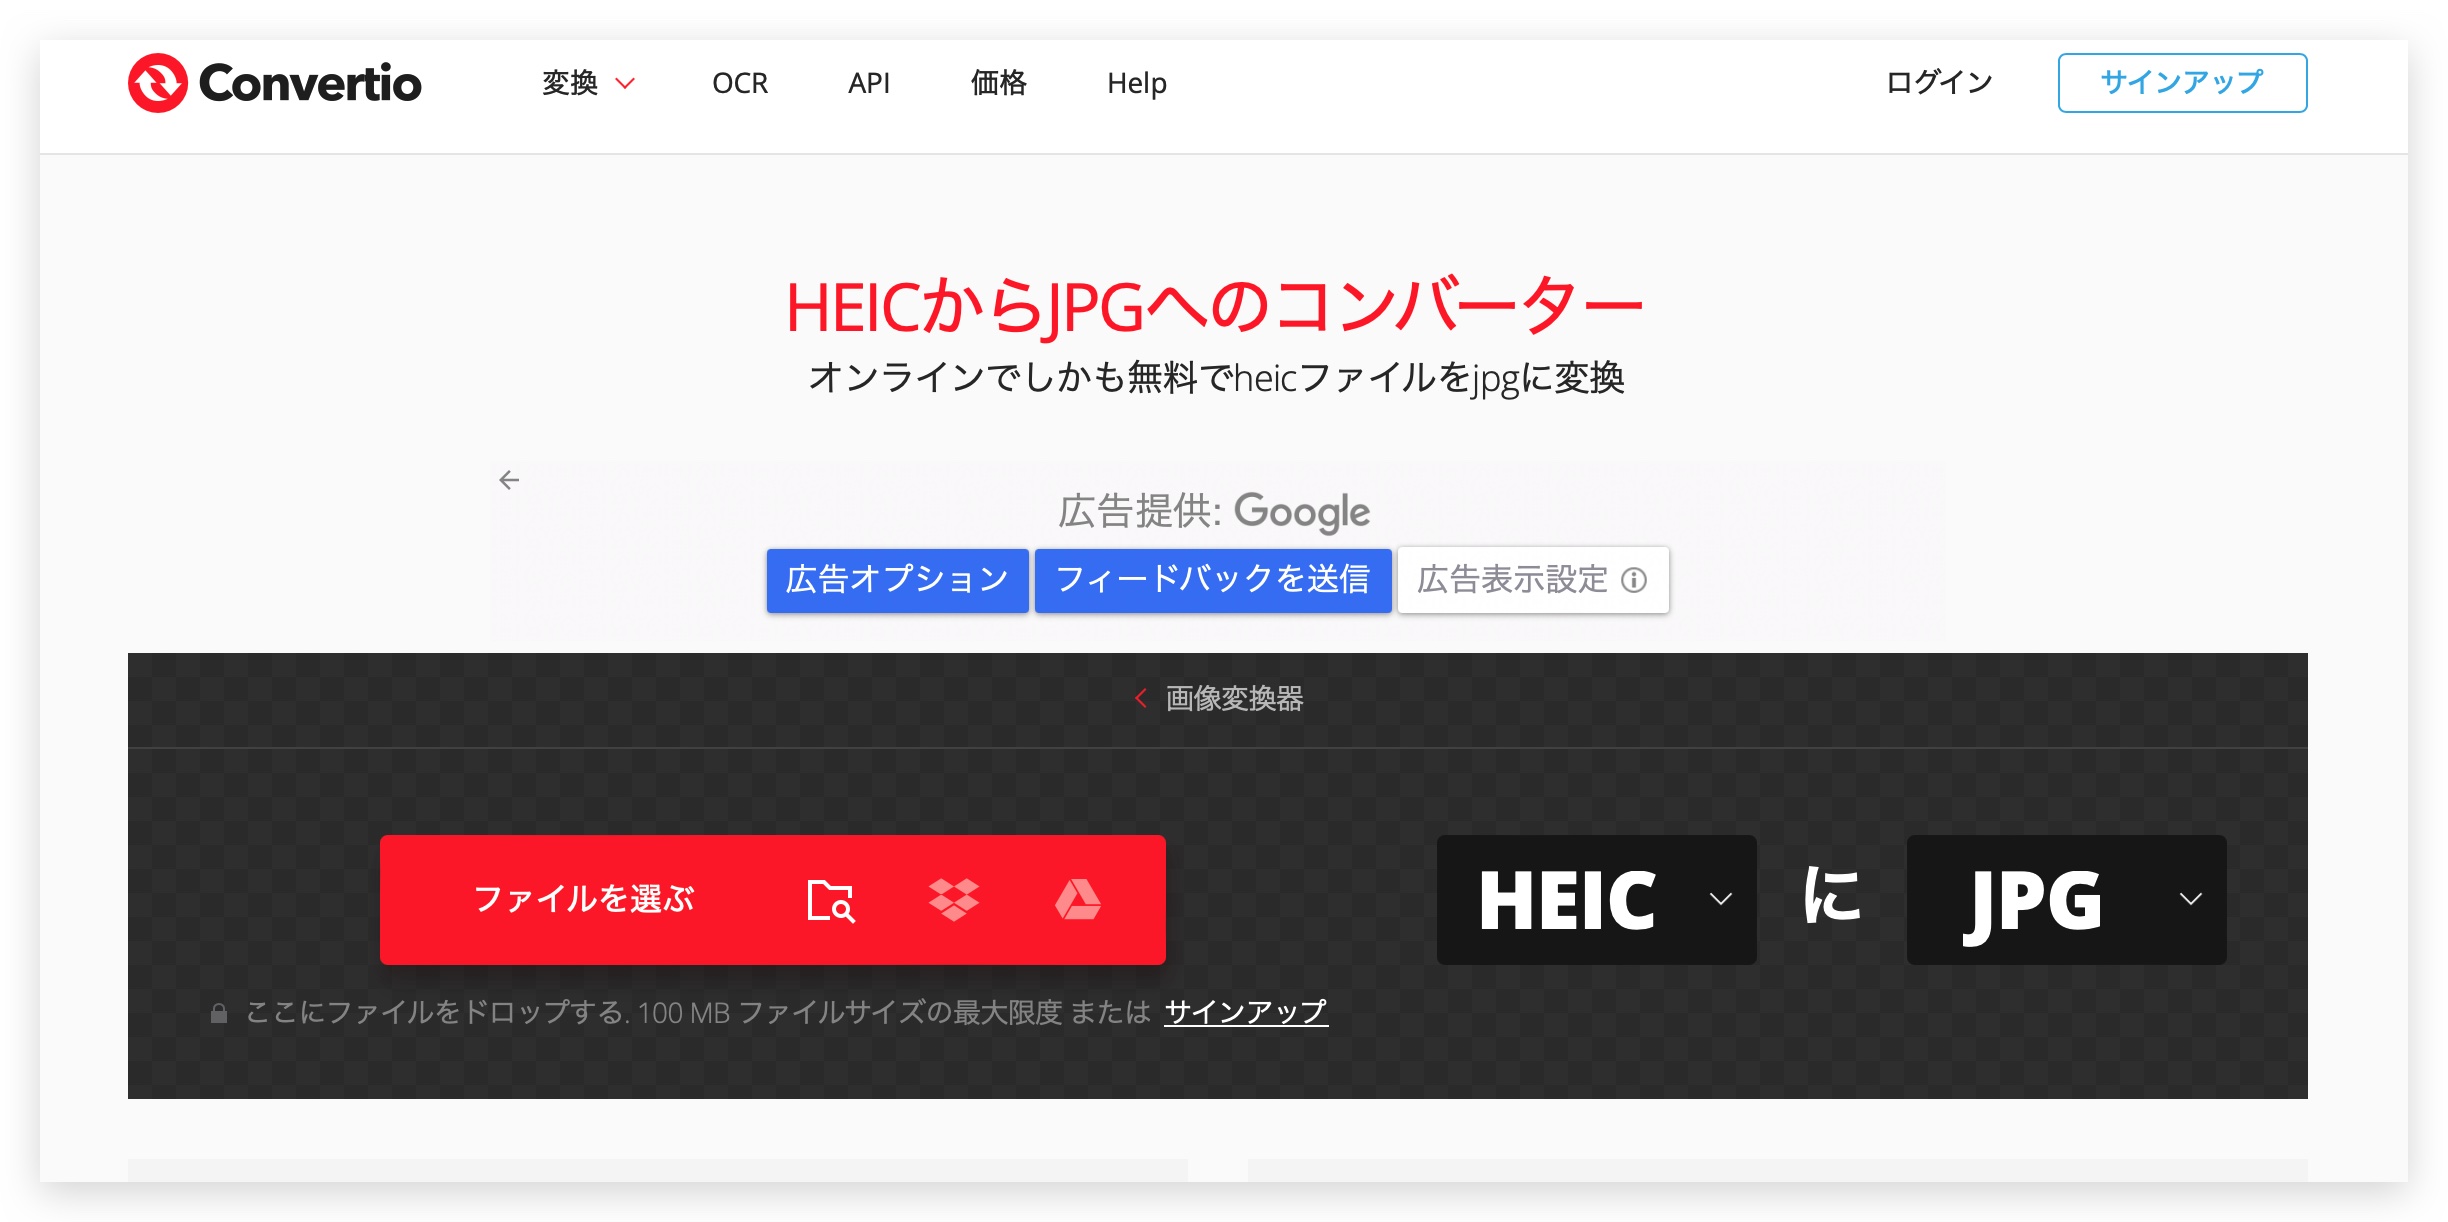 iPhone 写真 HEIC から JPG 変換